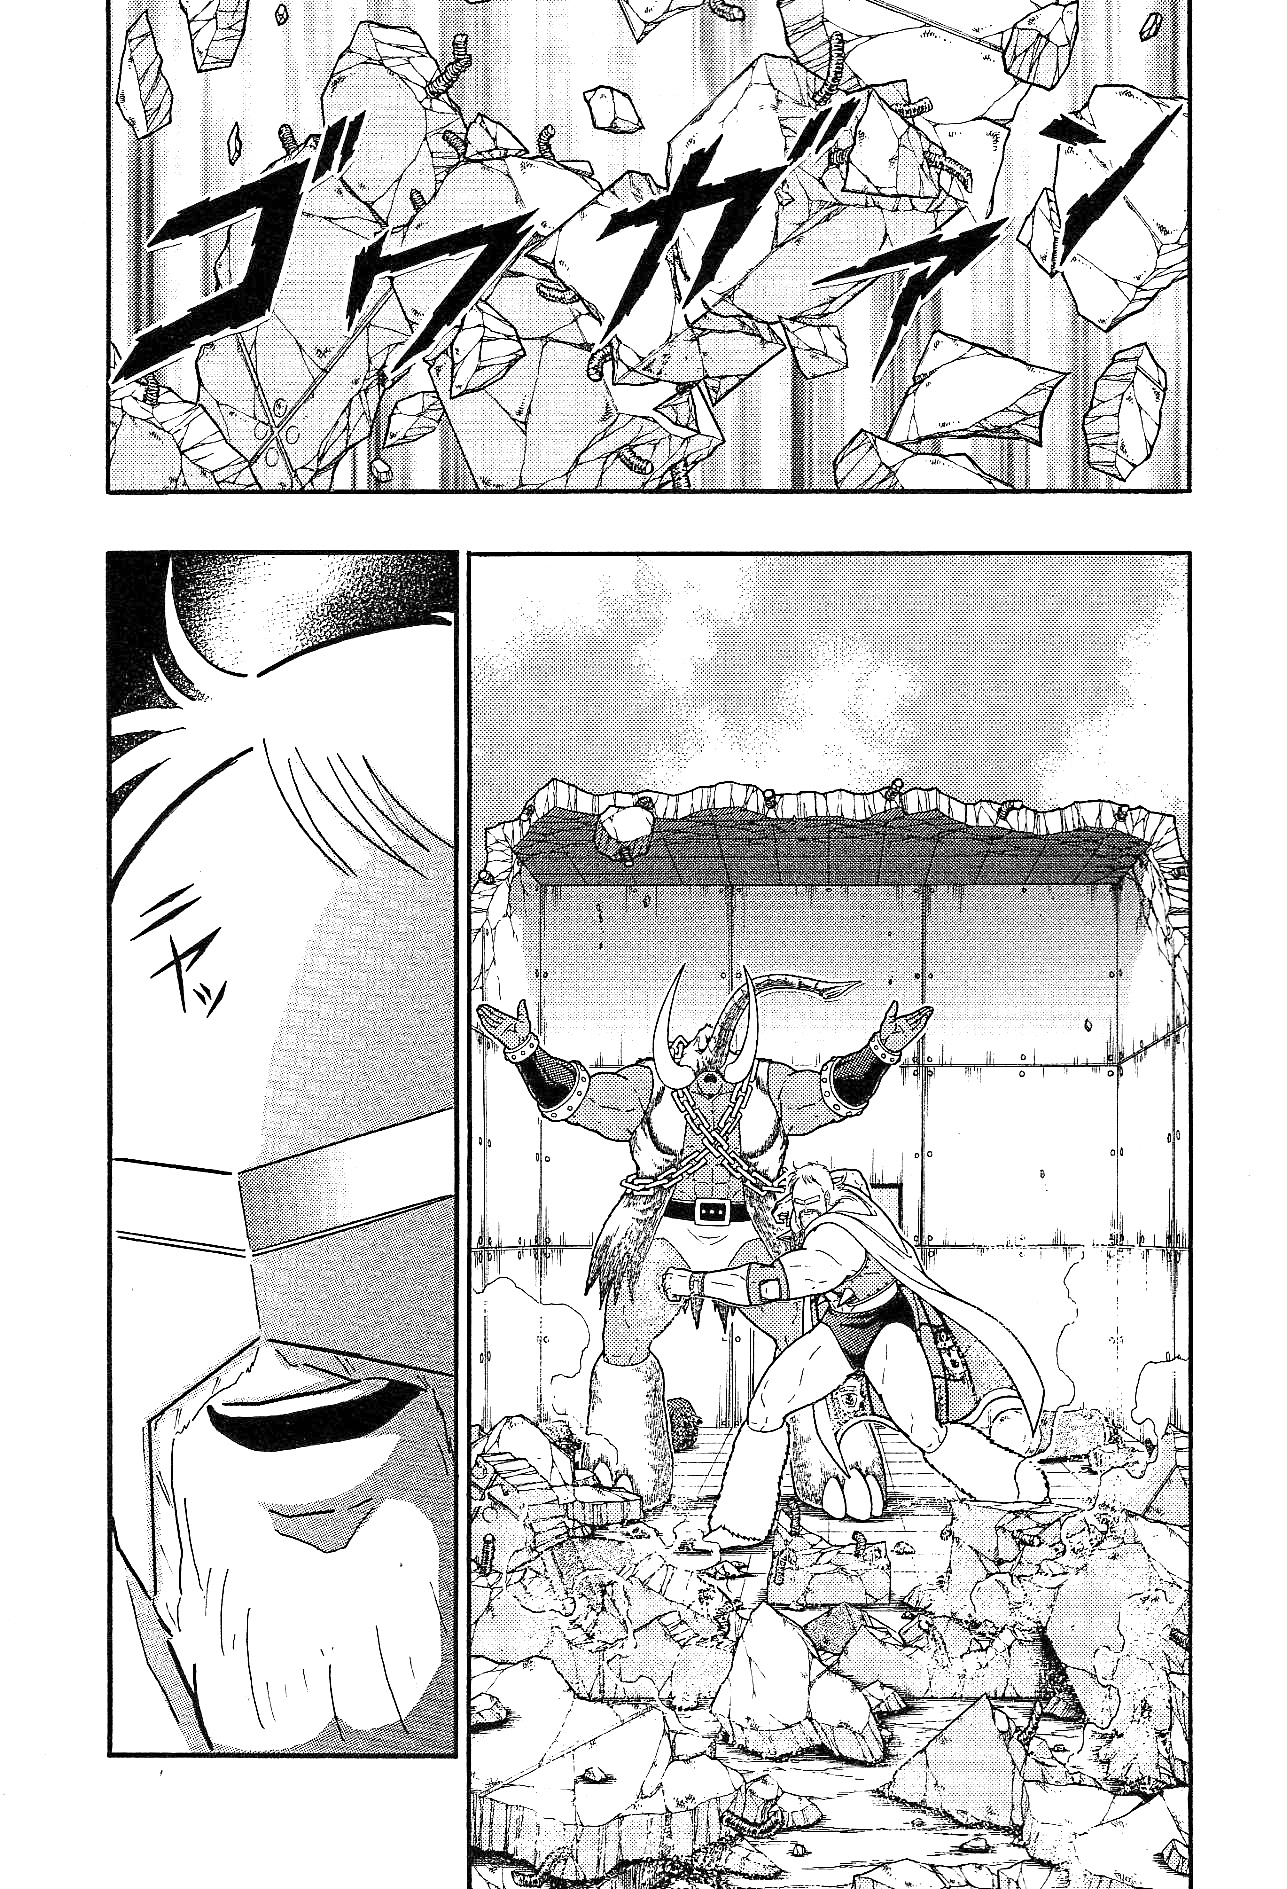 Kinnikuman II Sei: Kyuukyoku Choujin Tag Hen Vol. 21 Ch. 231 Message from Warsman!